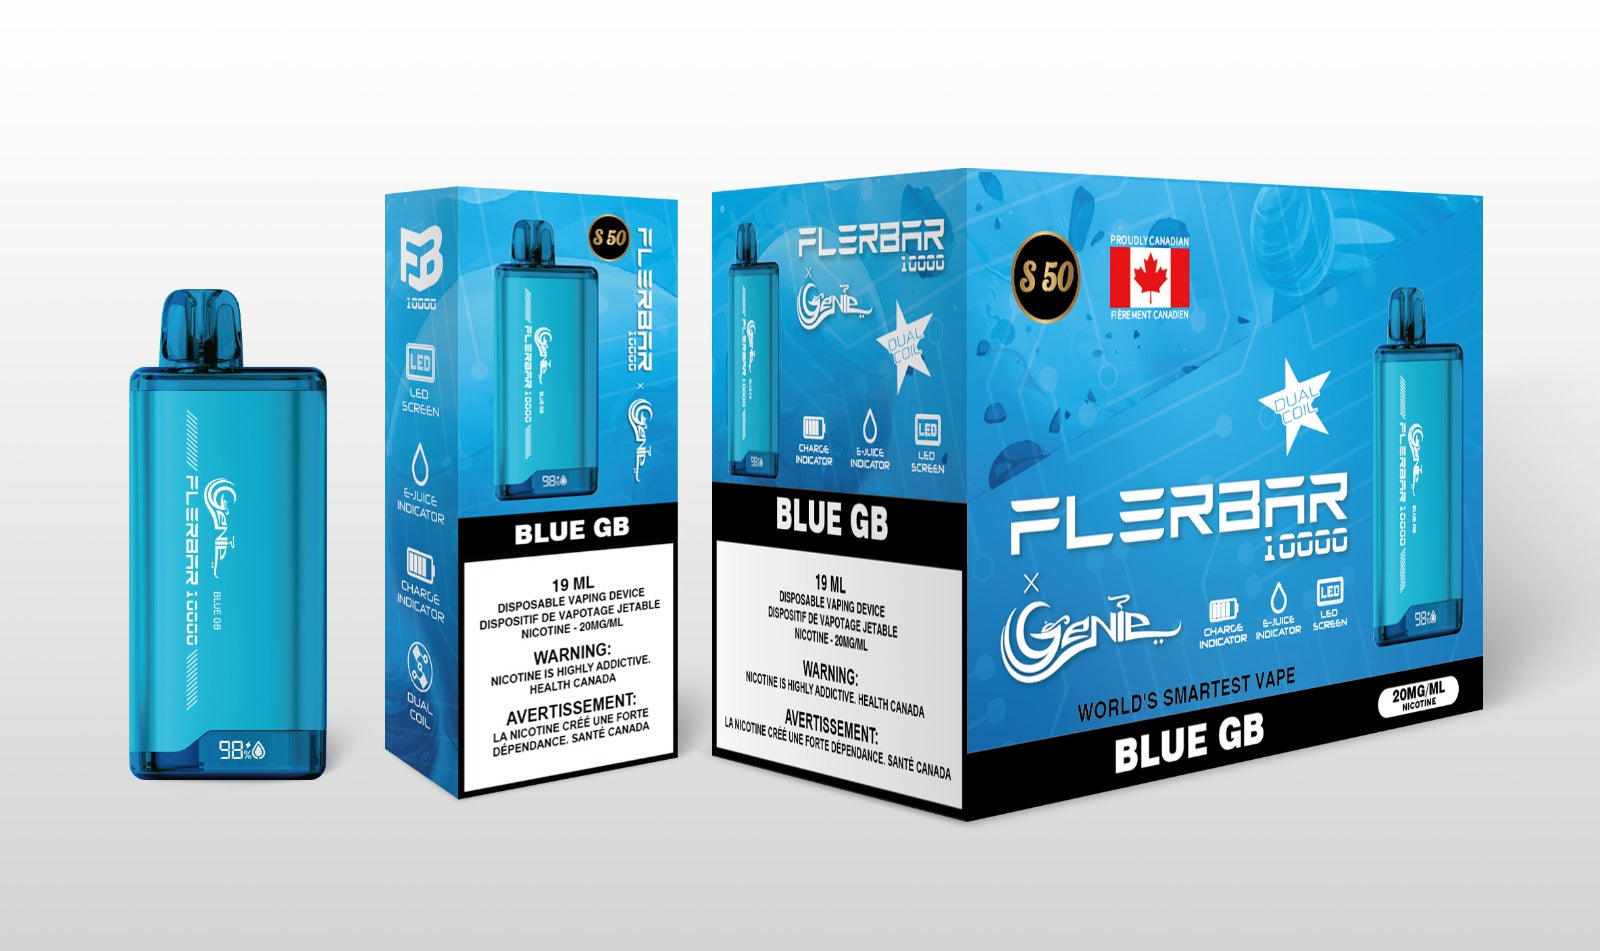 Genie 10000 flerbar - 10000 PUFFS  20 mg / mL Salt Nicotine  Juice Capacity: 19 mL  Dual Coil  Charge Indicator  E- Juice Indicator  LED Screen  Blue GB s50